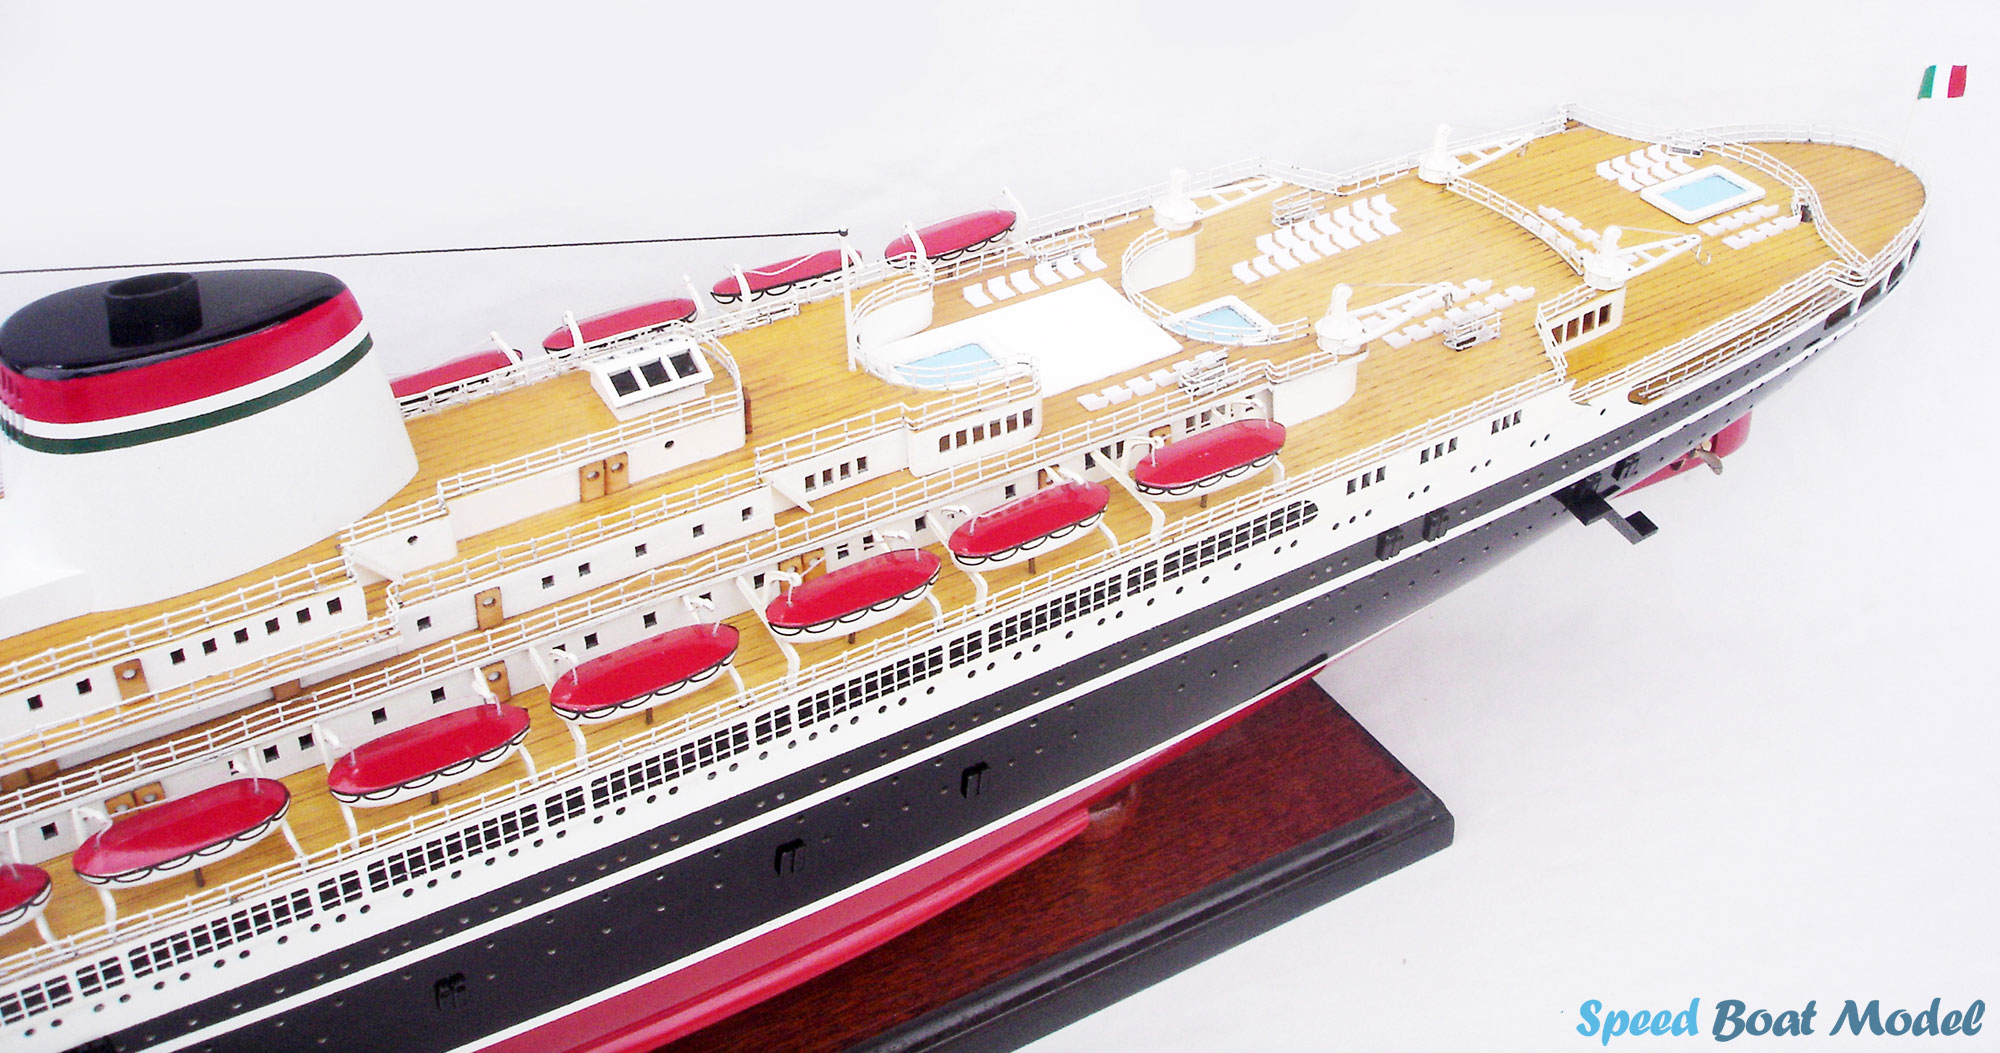 Ss Cristorofo Colombo Cruise Ship Model 33.4